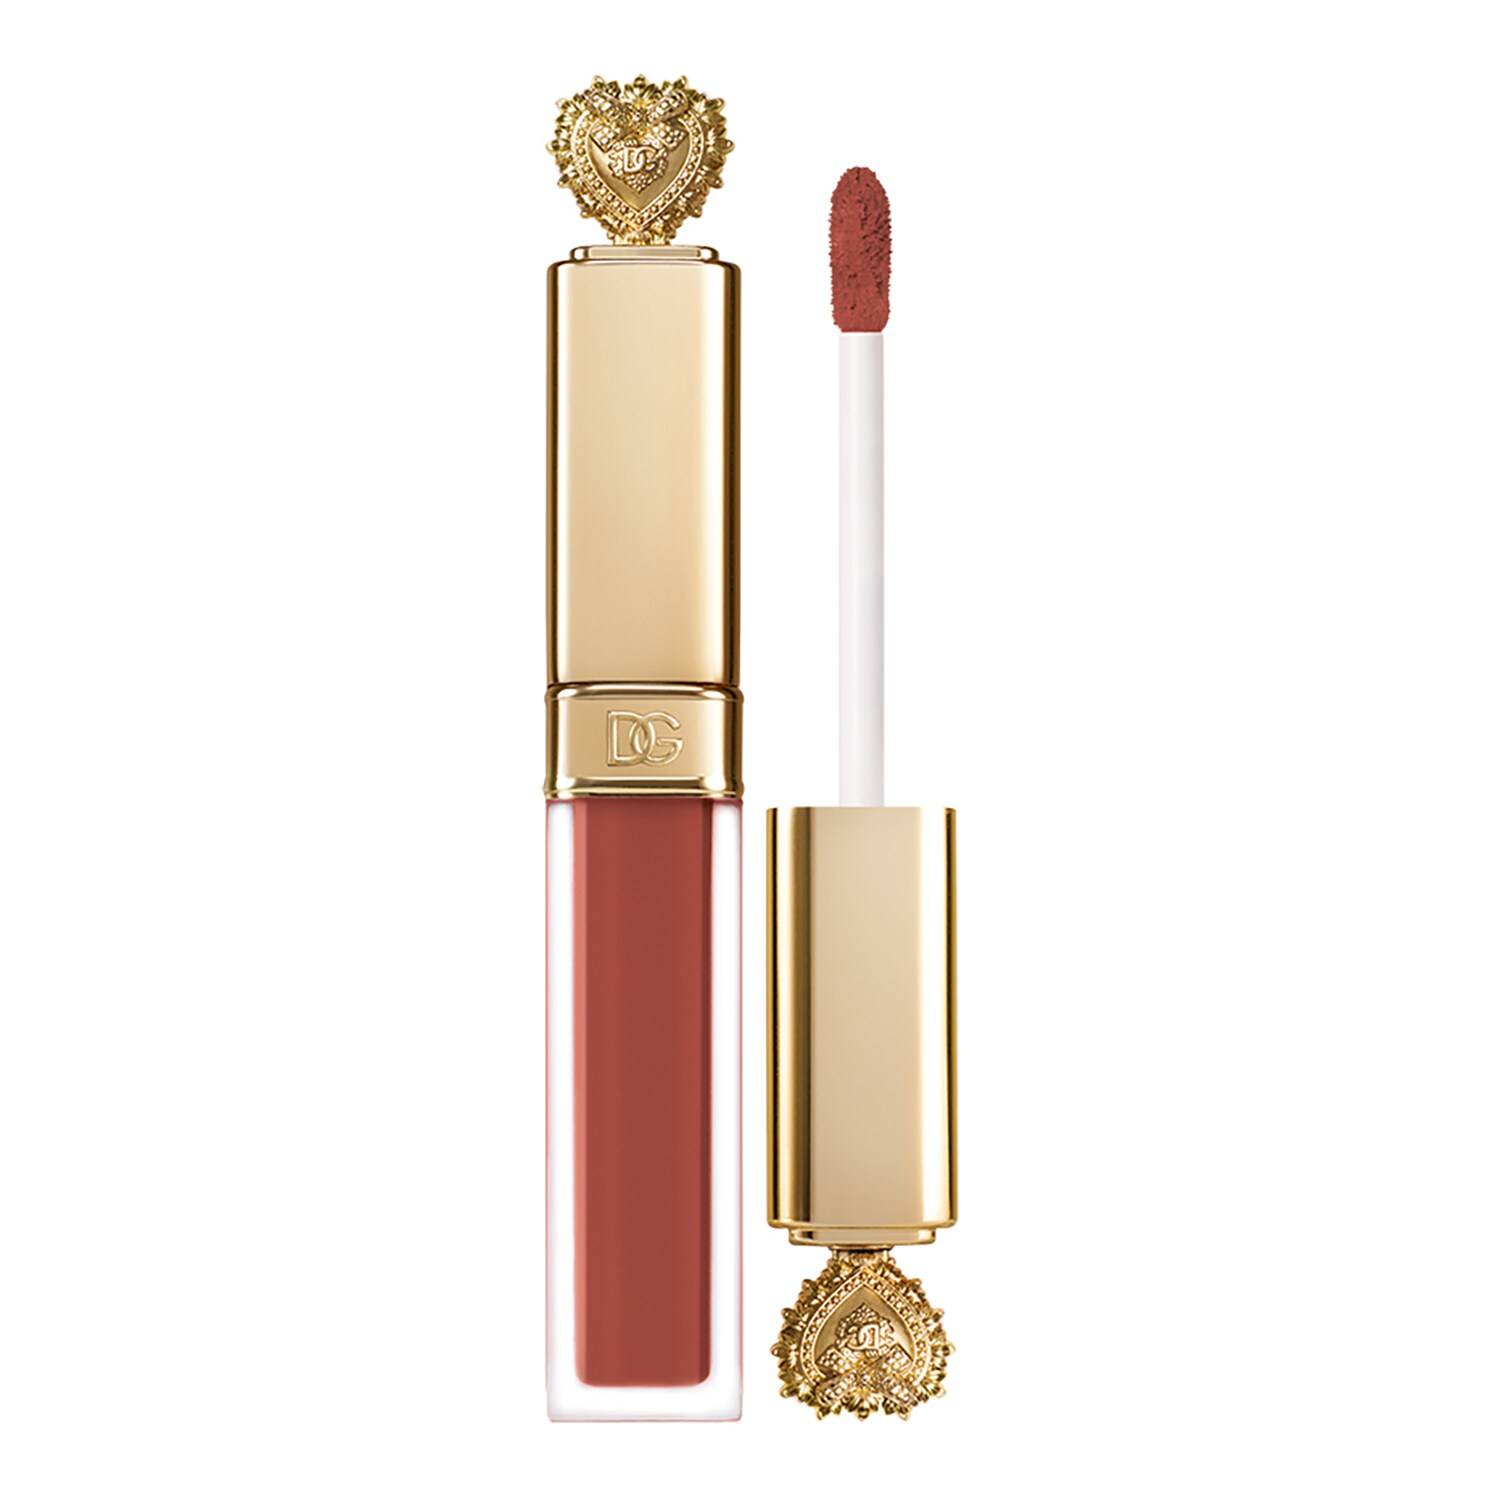 Dolce & Gabbana Devotion Liquid Lipstick In Mousse 5Ml 110 Generosita (Deep Nude)